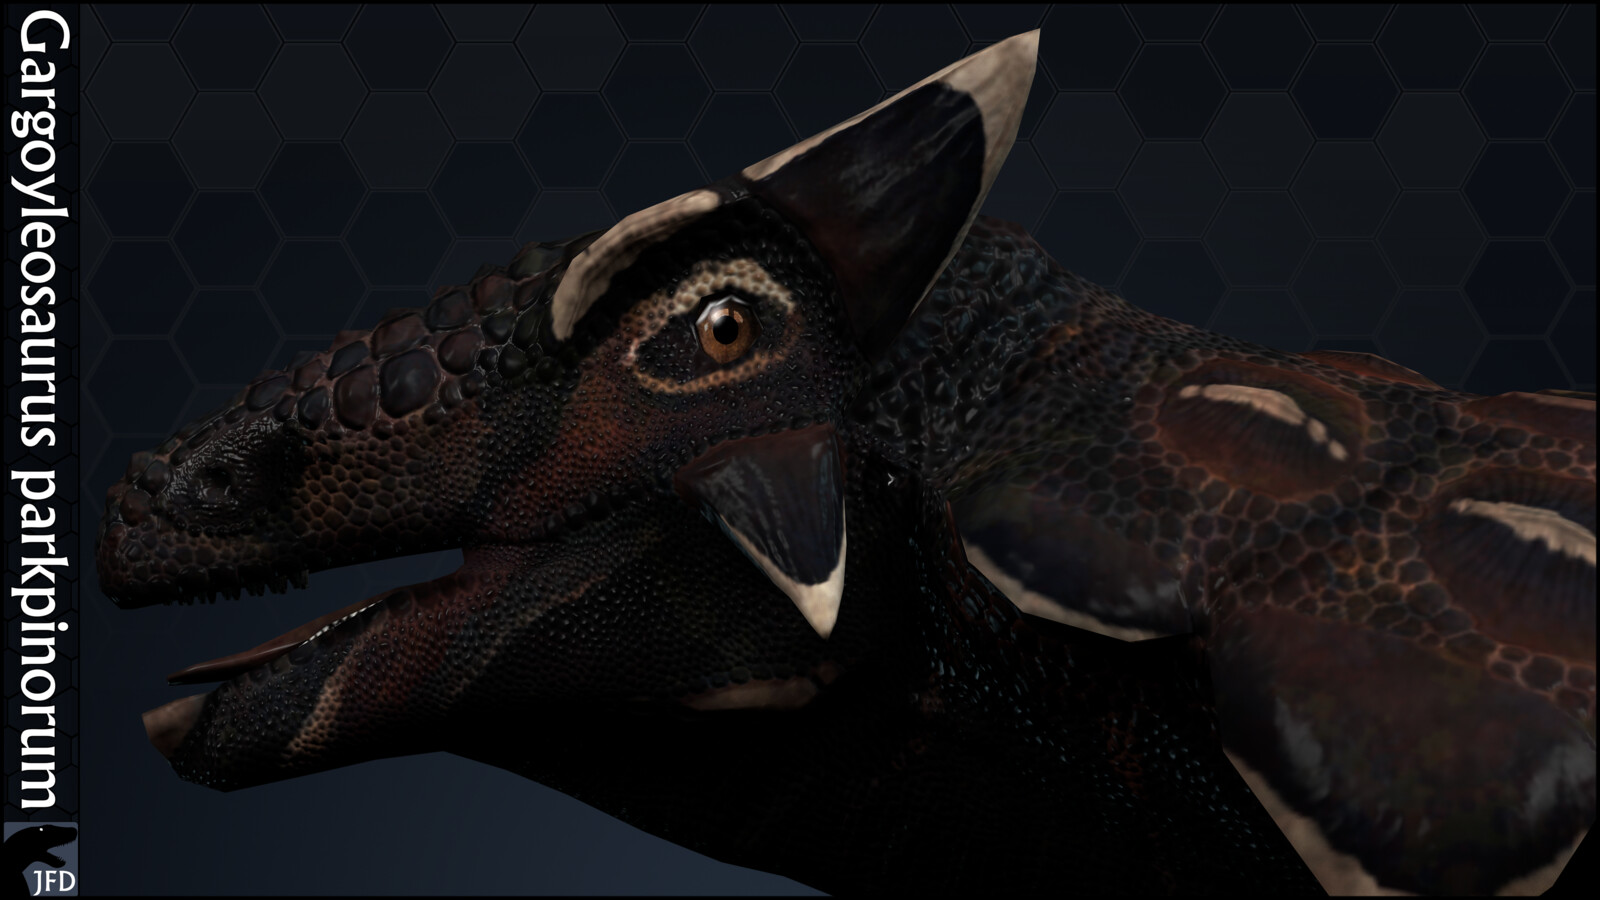 Gargoyleosaurus parkpinorum head full render.